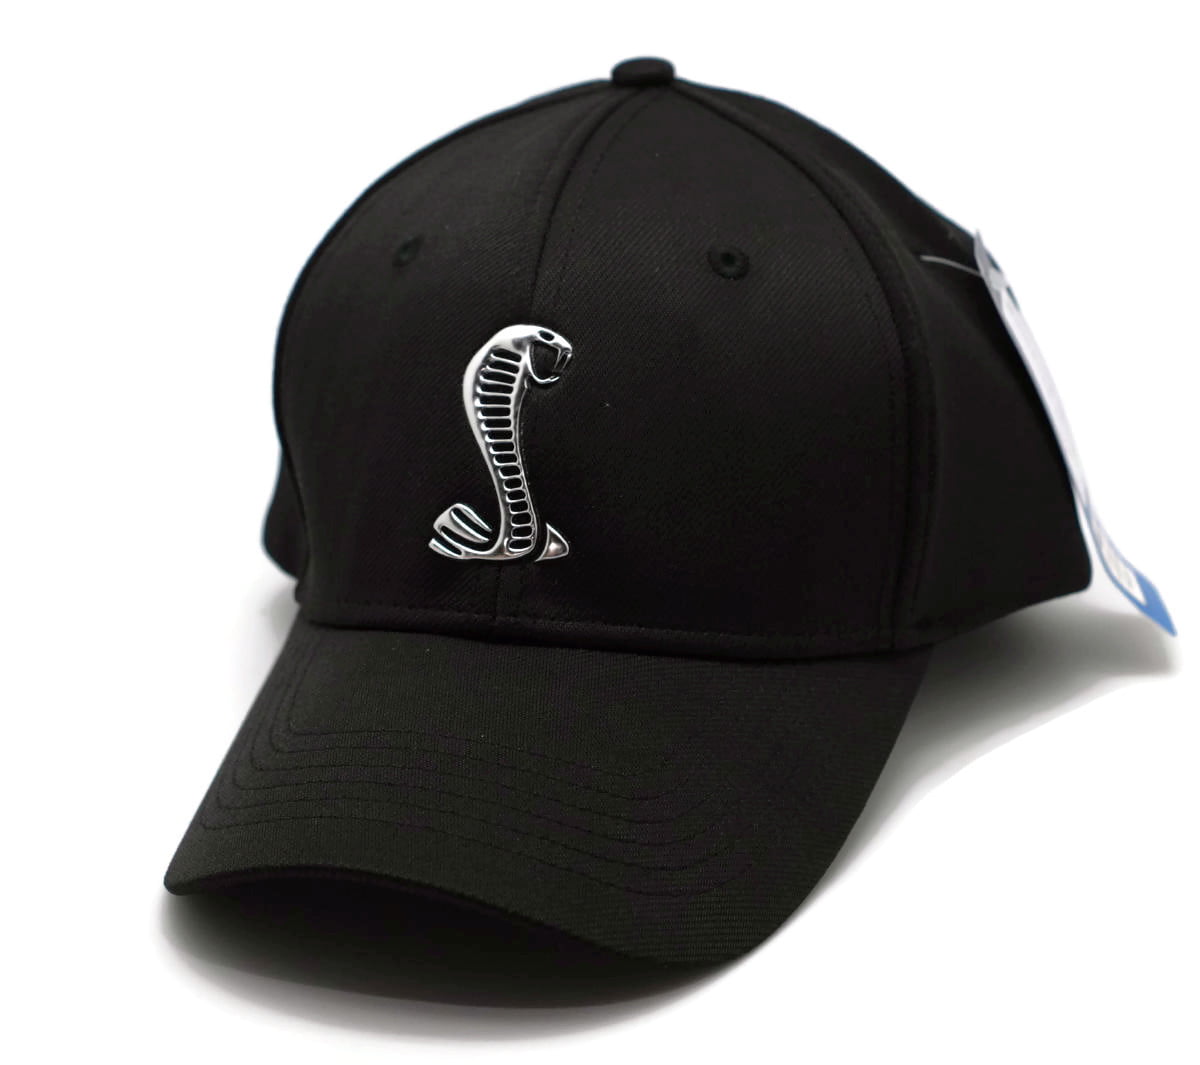 Shelby Cobra hat Trucker hat mesh hat adjustable black